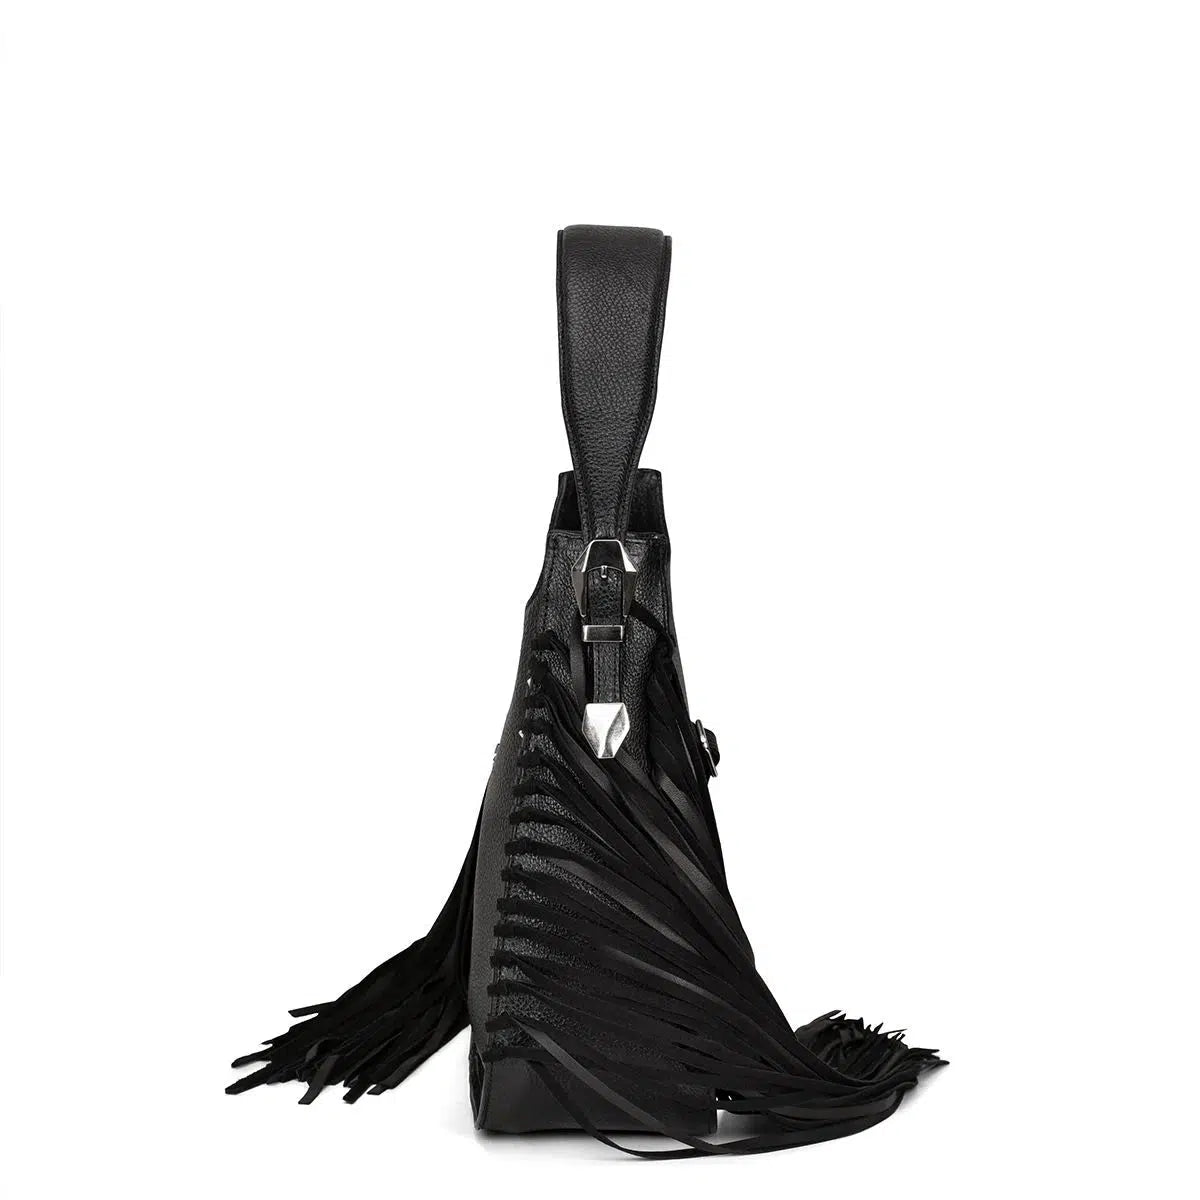 BOD54BN - Cuadra black casual fashion leather fringed bag for woman-CUADRA-Kuet-Cuadra-Boots